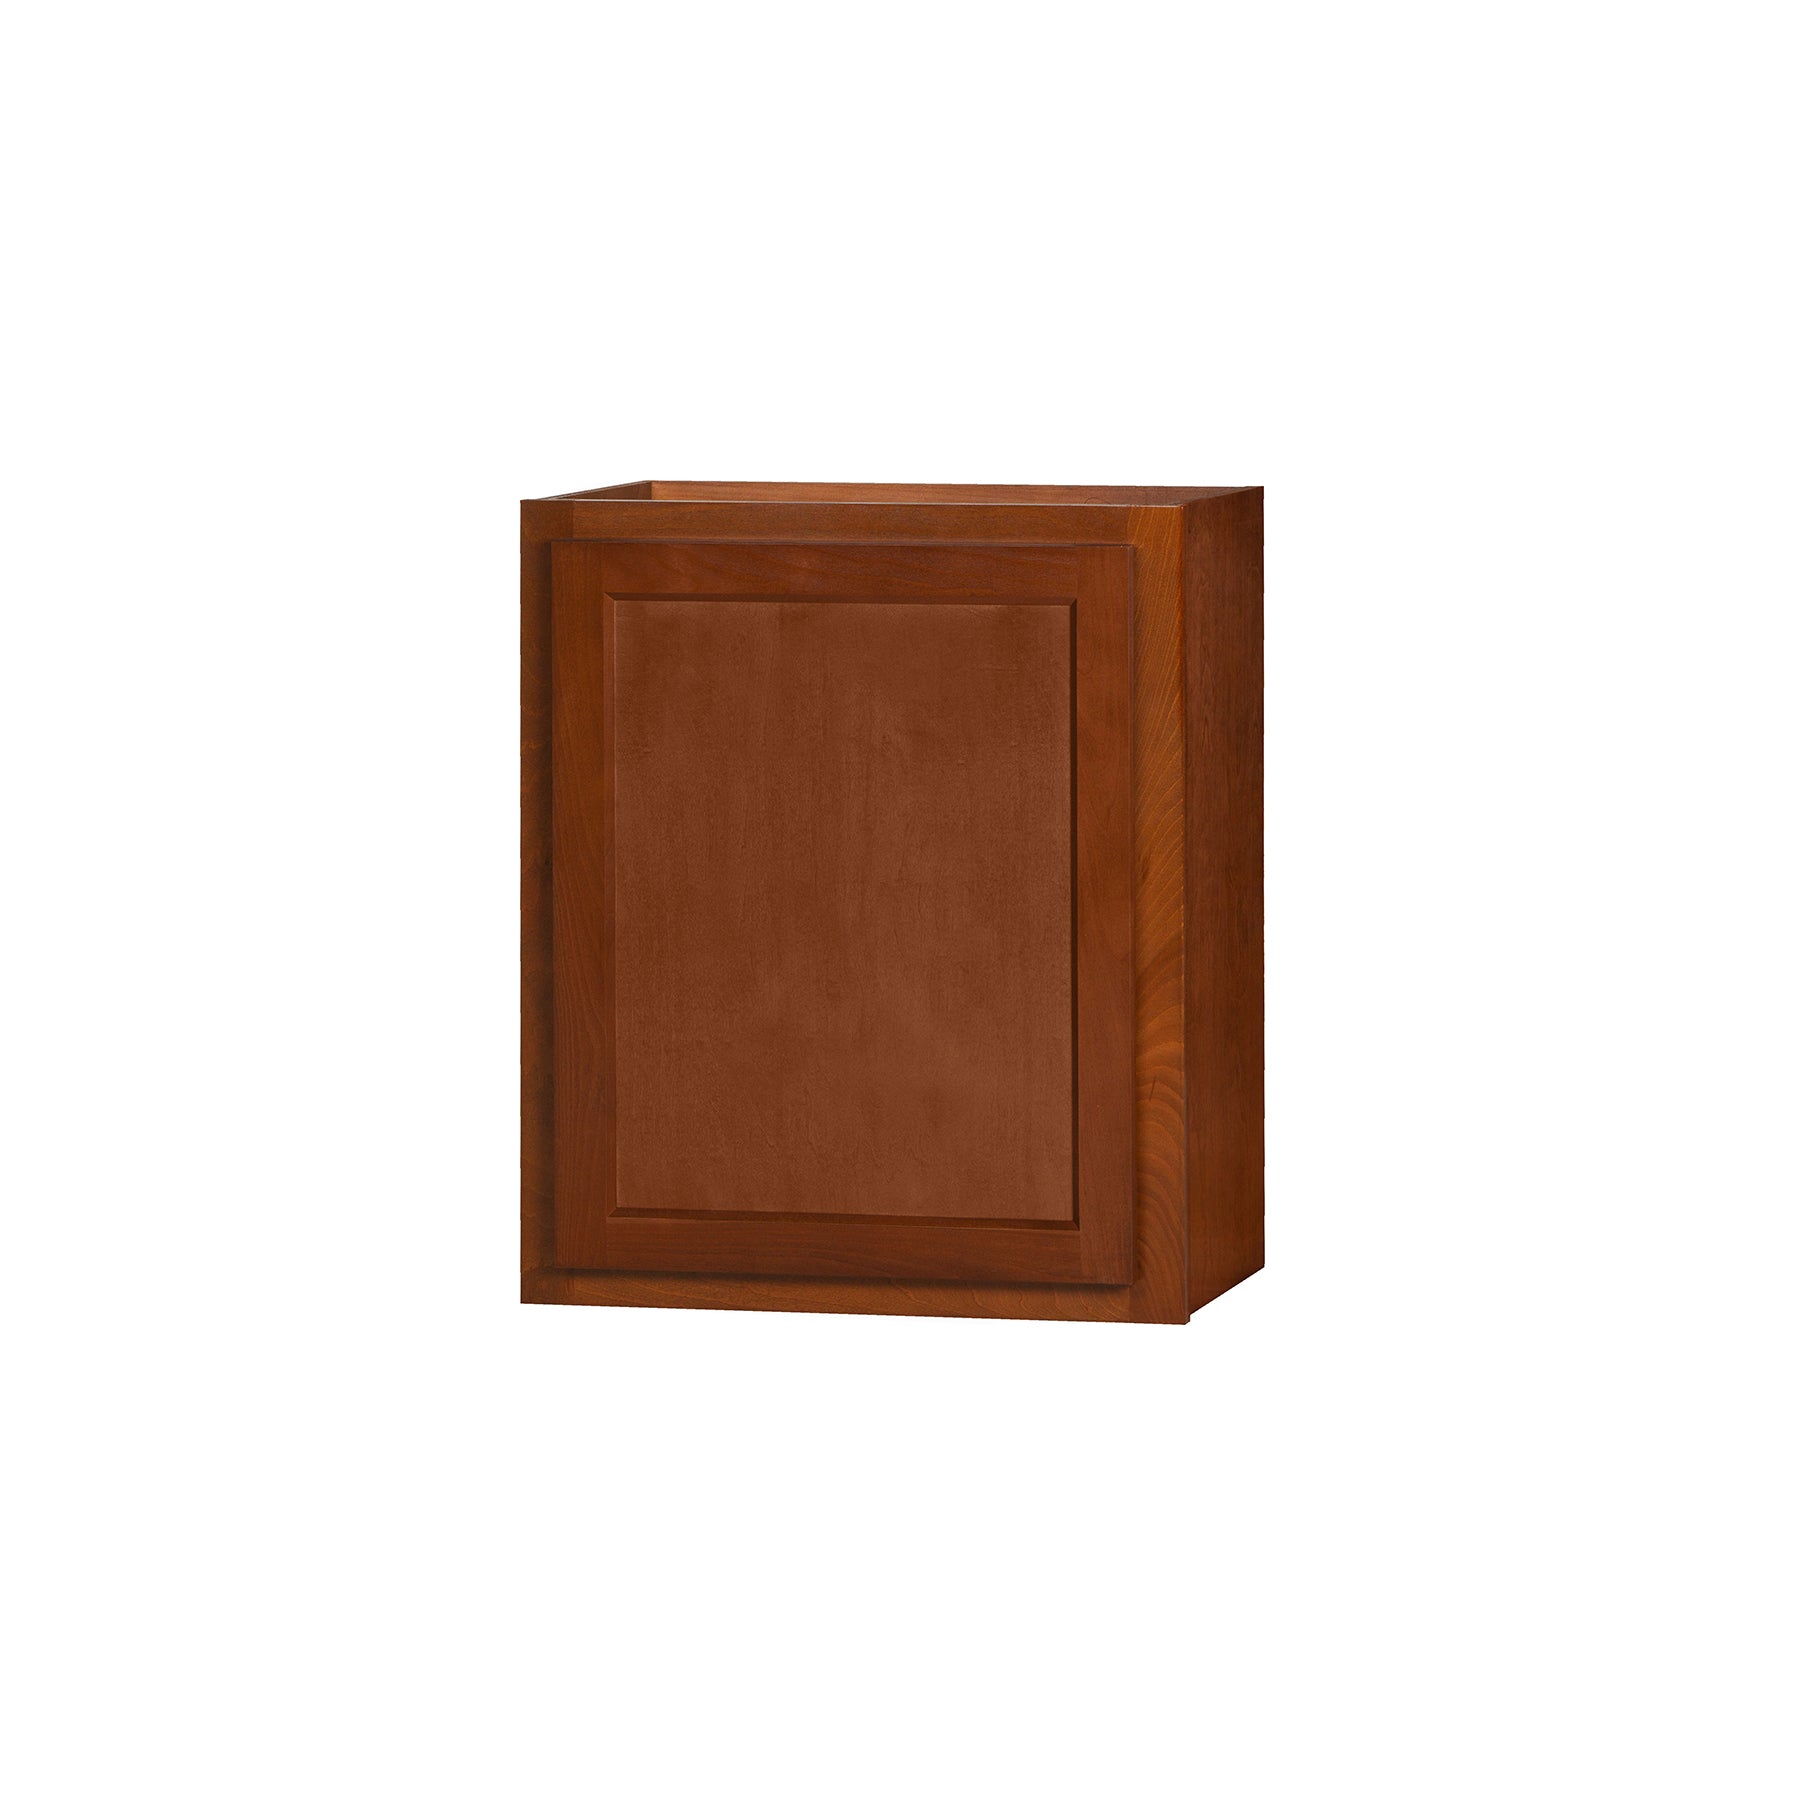 30 inch Wall Cabinets - Single Door - Glenwood Shaker - 24 Inch W x 30 Inch H x 12 Inch D